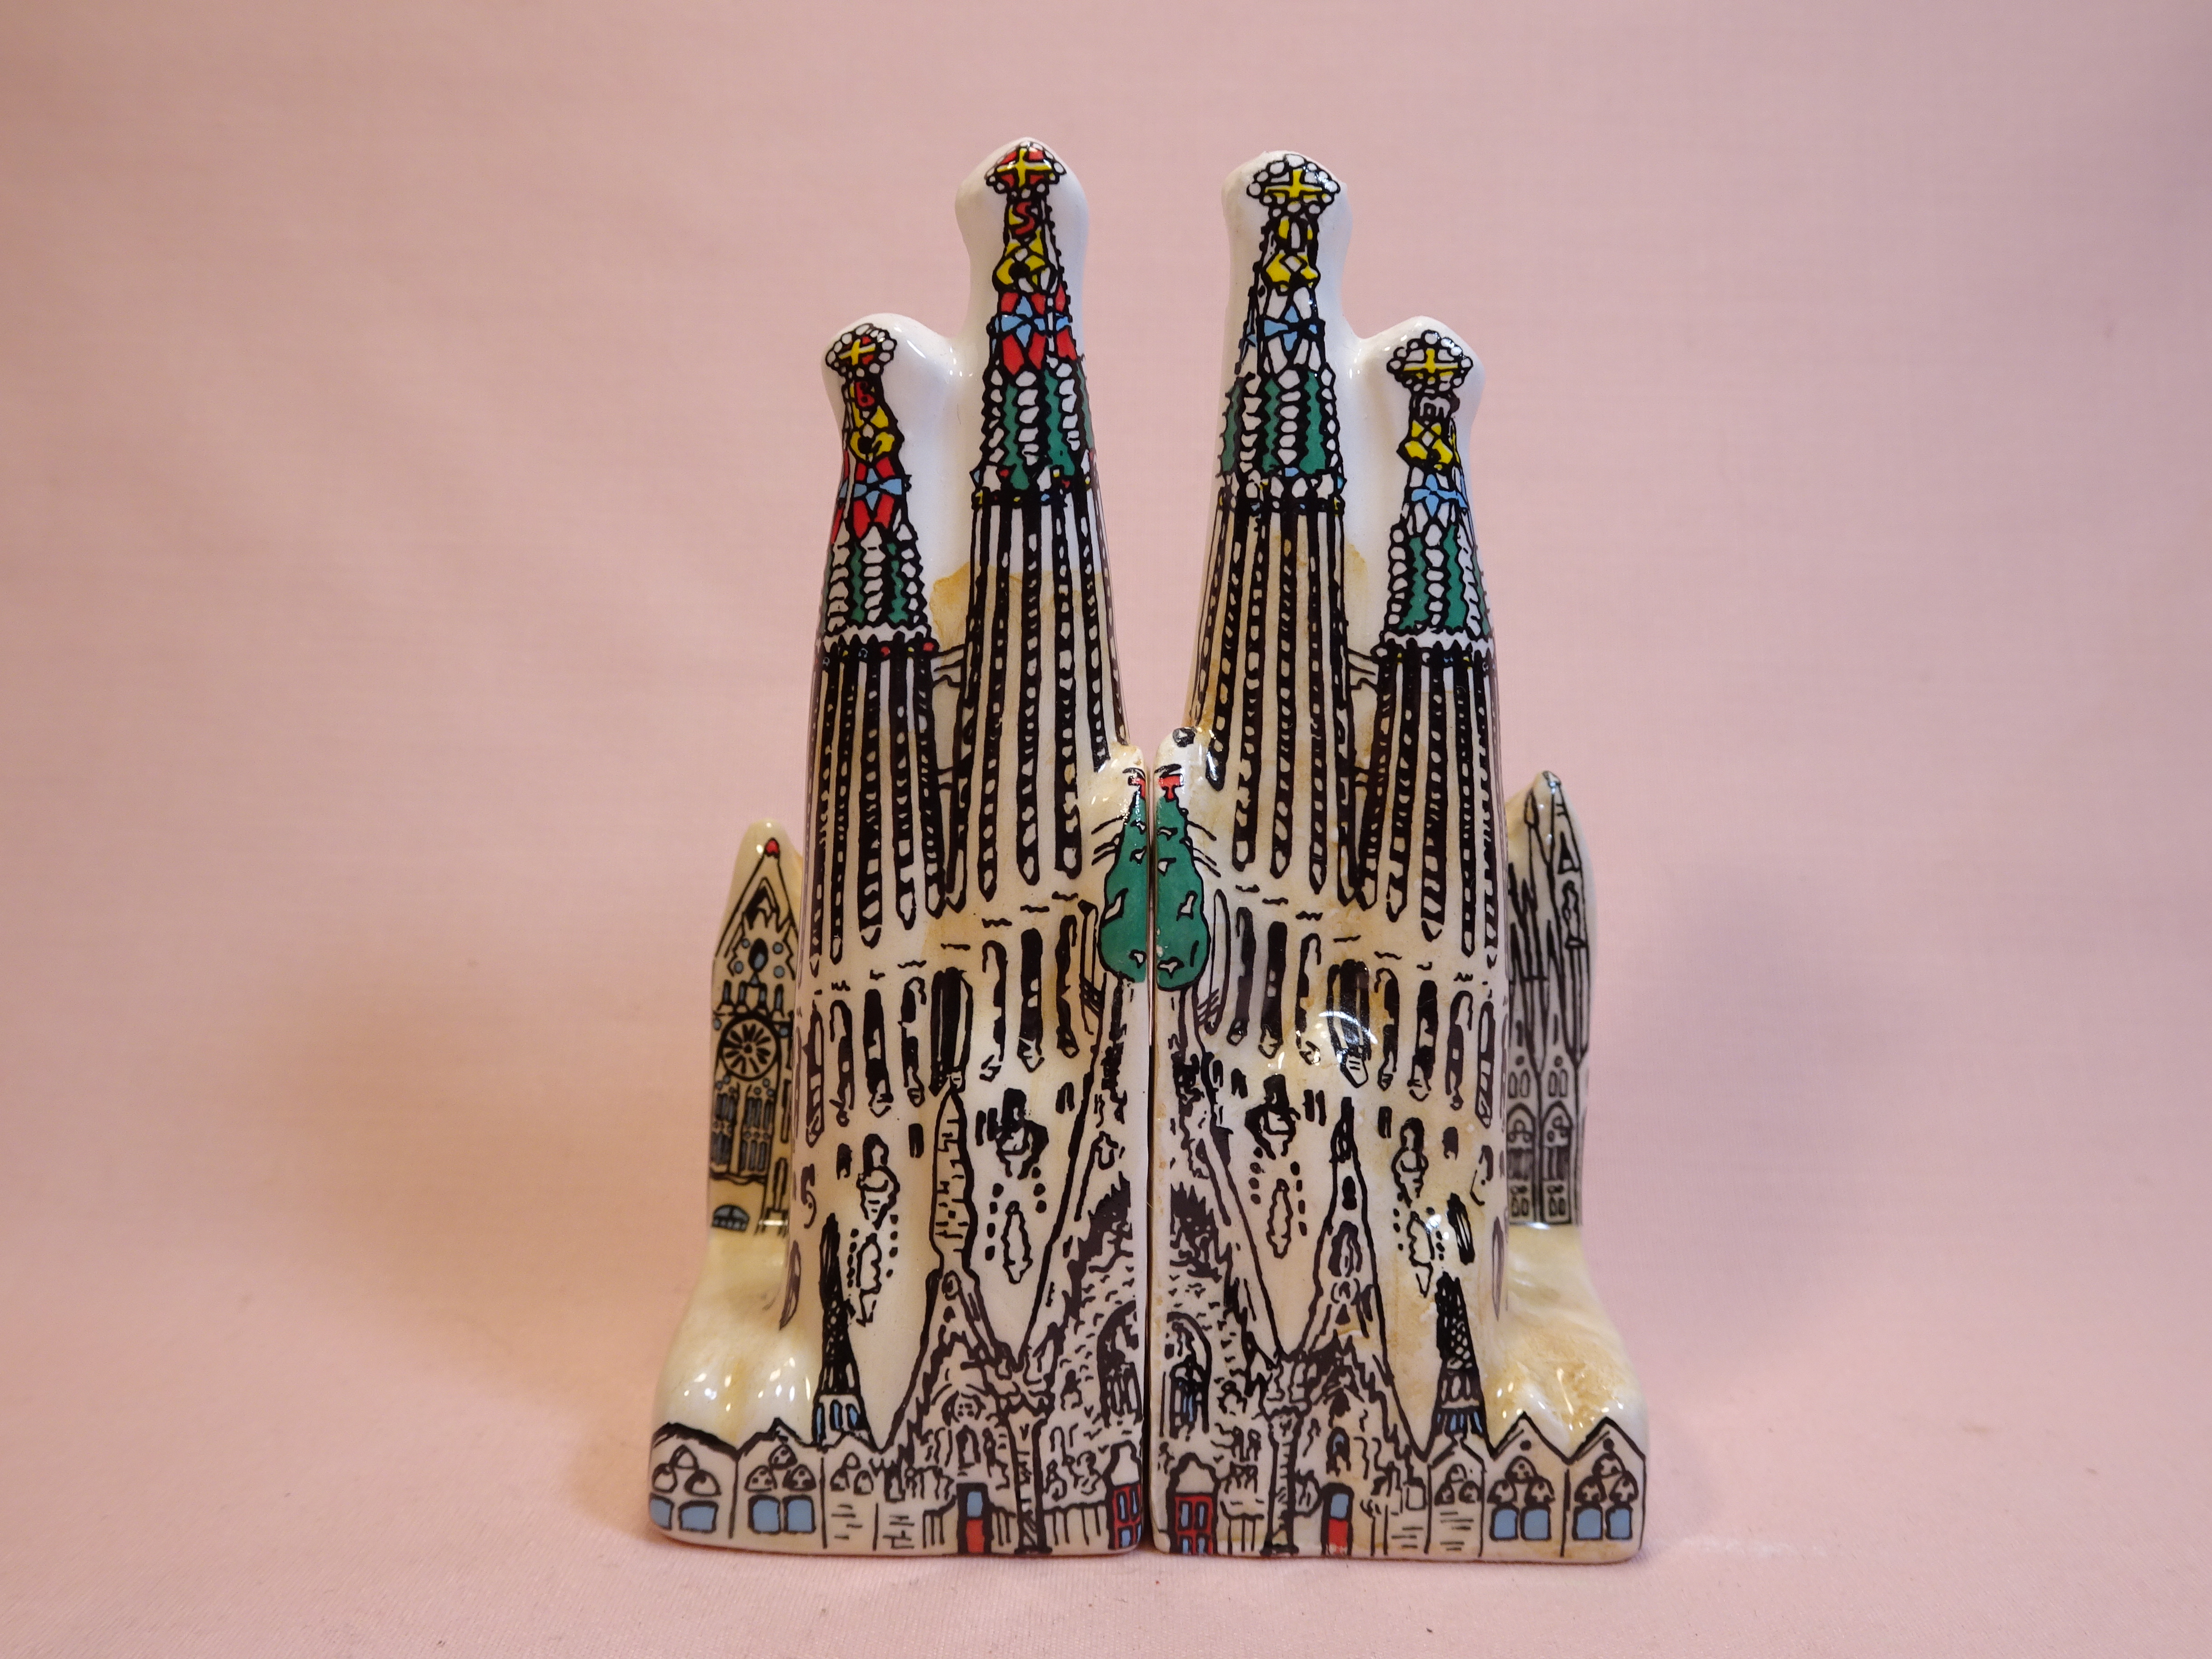 La Sagrada Familia by Gaudi salt and pepper shakers